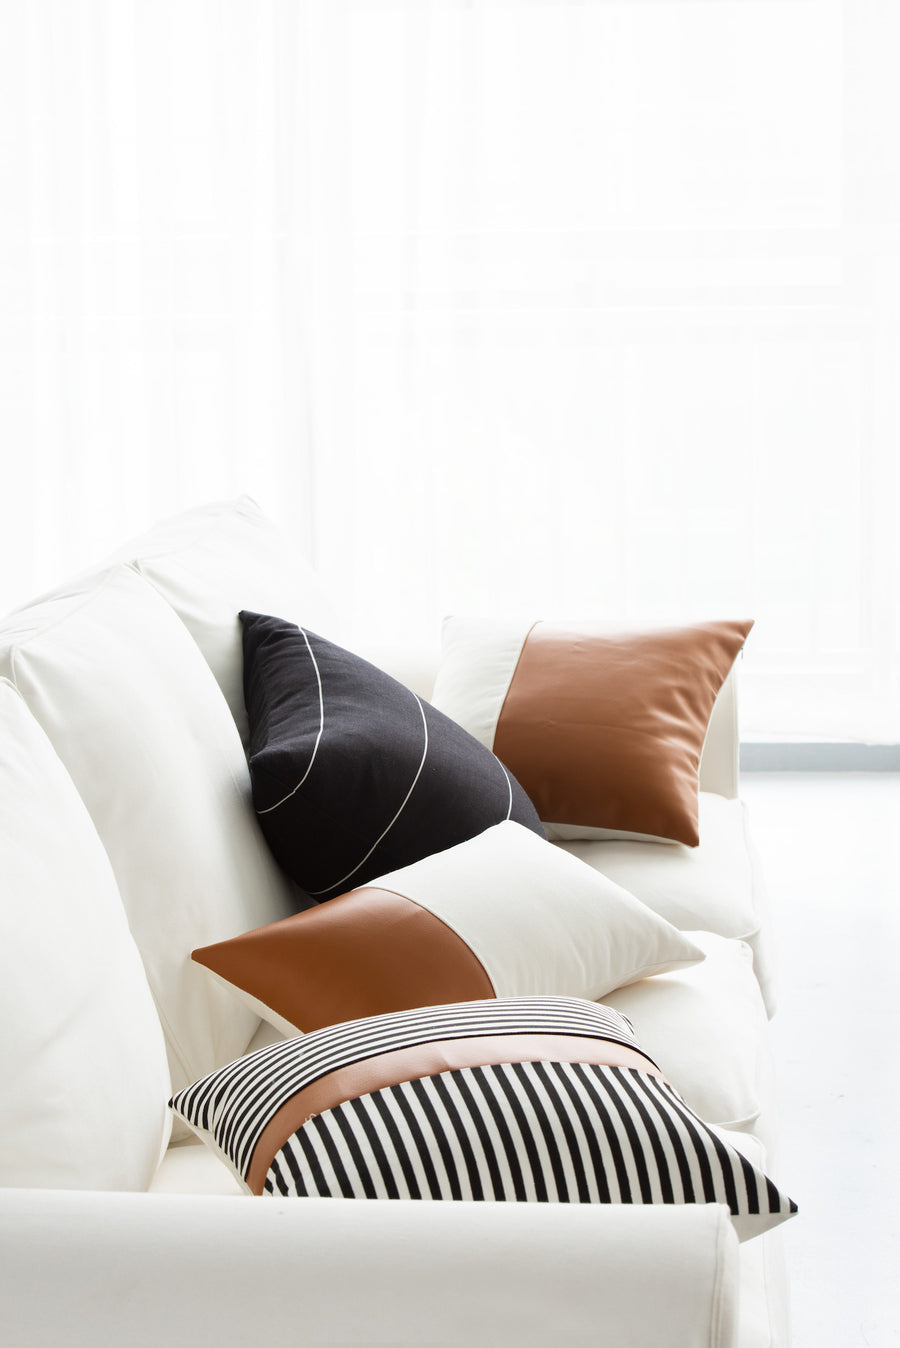 Modern Boho Outdoor Pillow Cover, Black Striped, 20